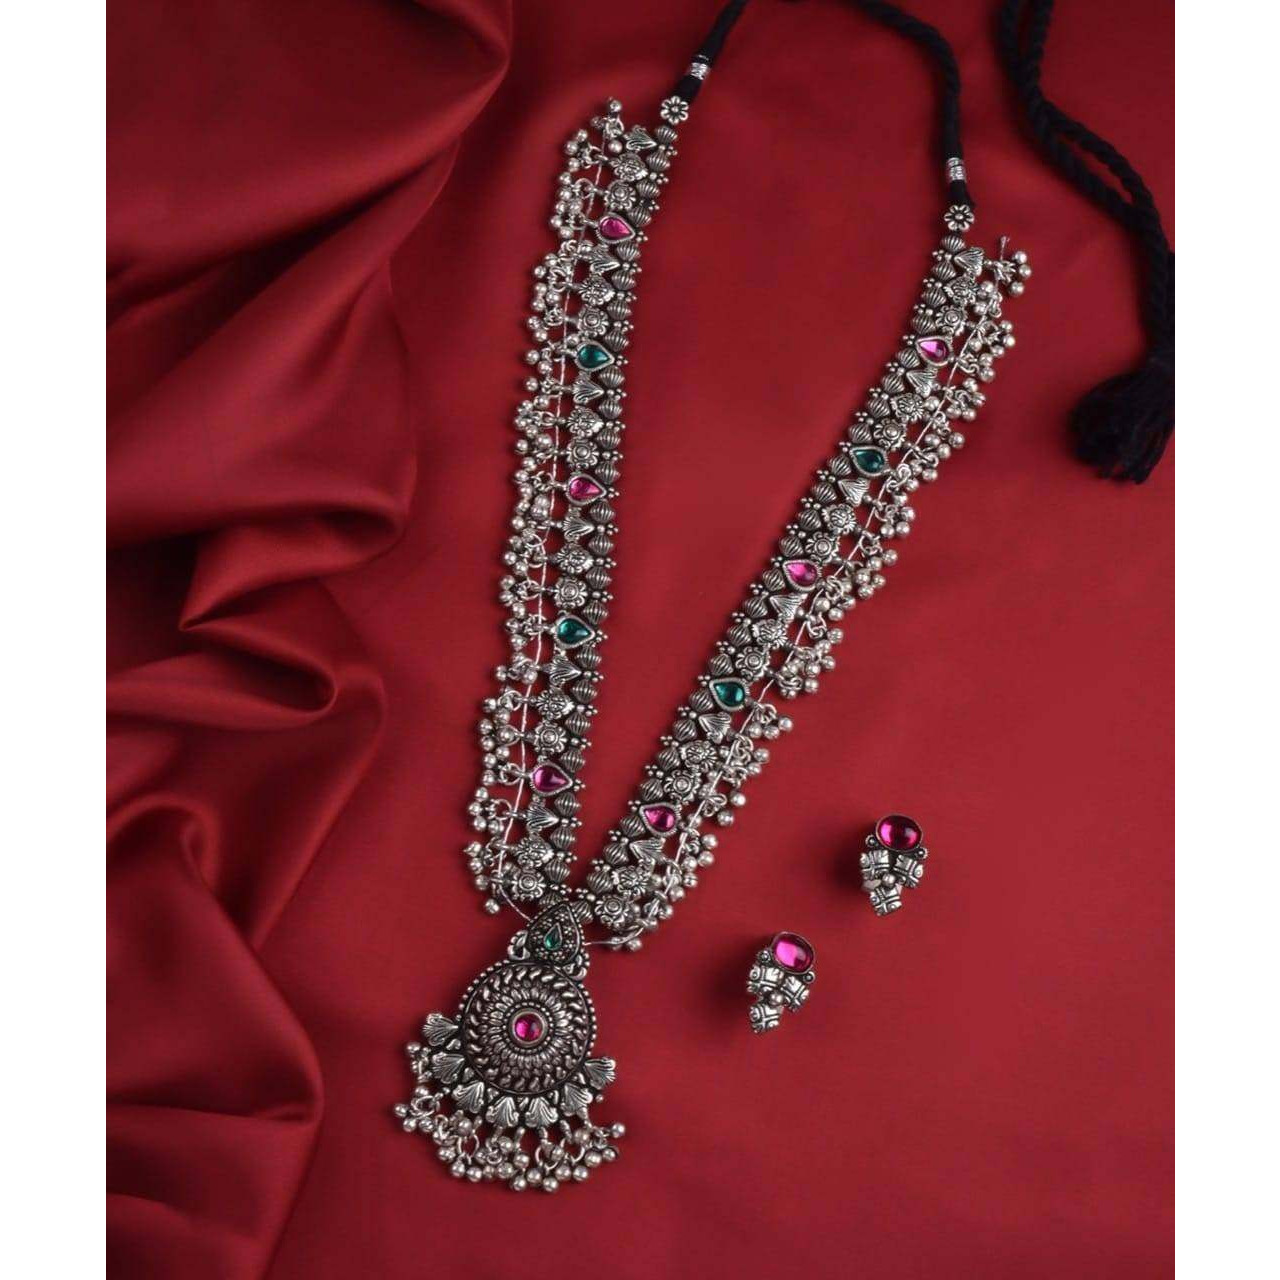 Kolhapuri saaj oxidised wedding bridal jewellery, Indian maharashtrian jewelry, German silver jewellery set, long pendant set, gifts for her